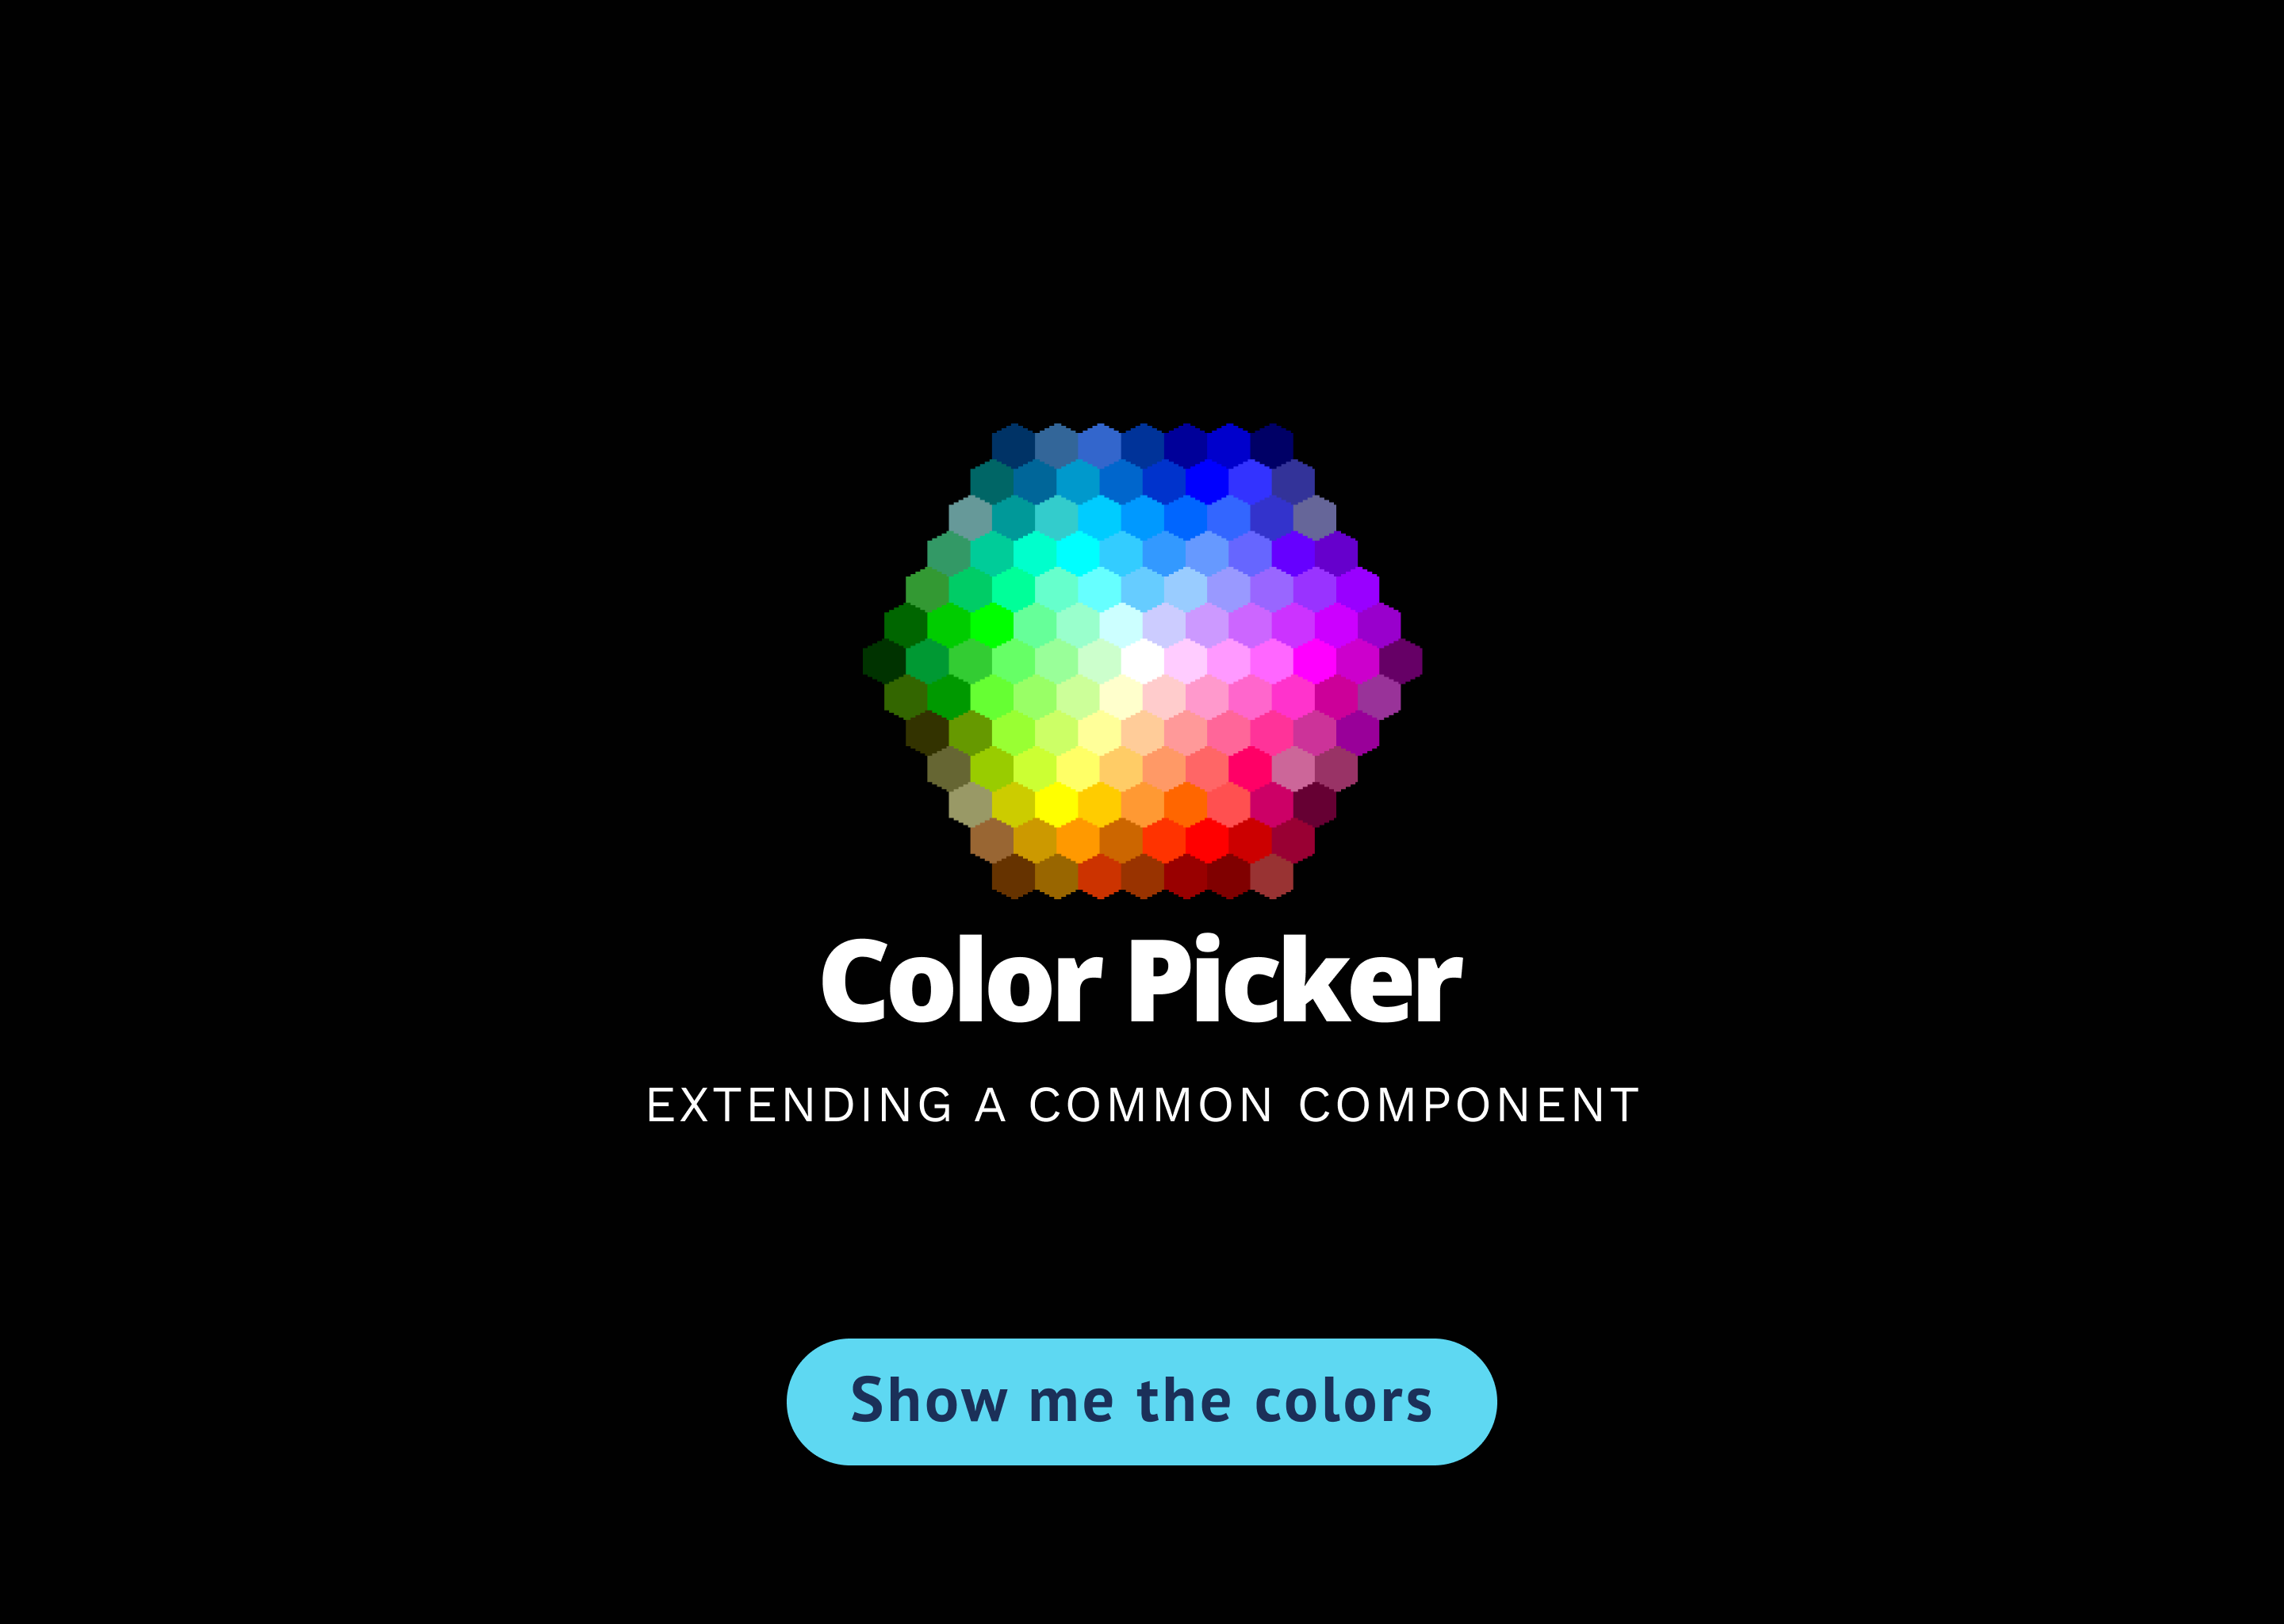 Color Picker presentation slide example